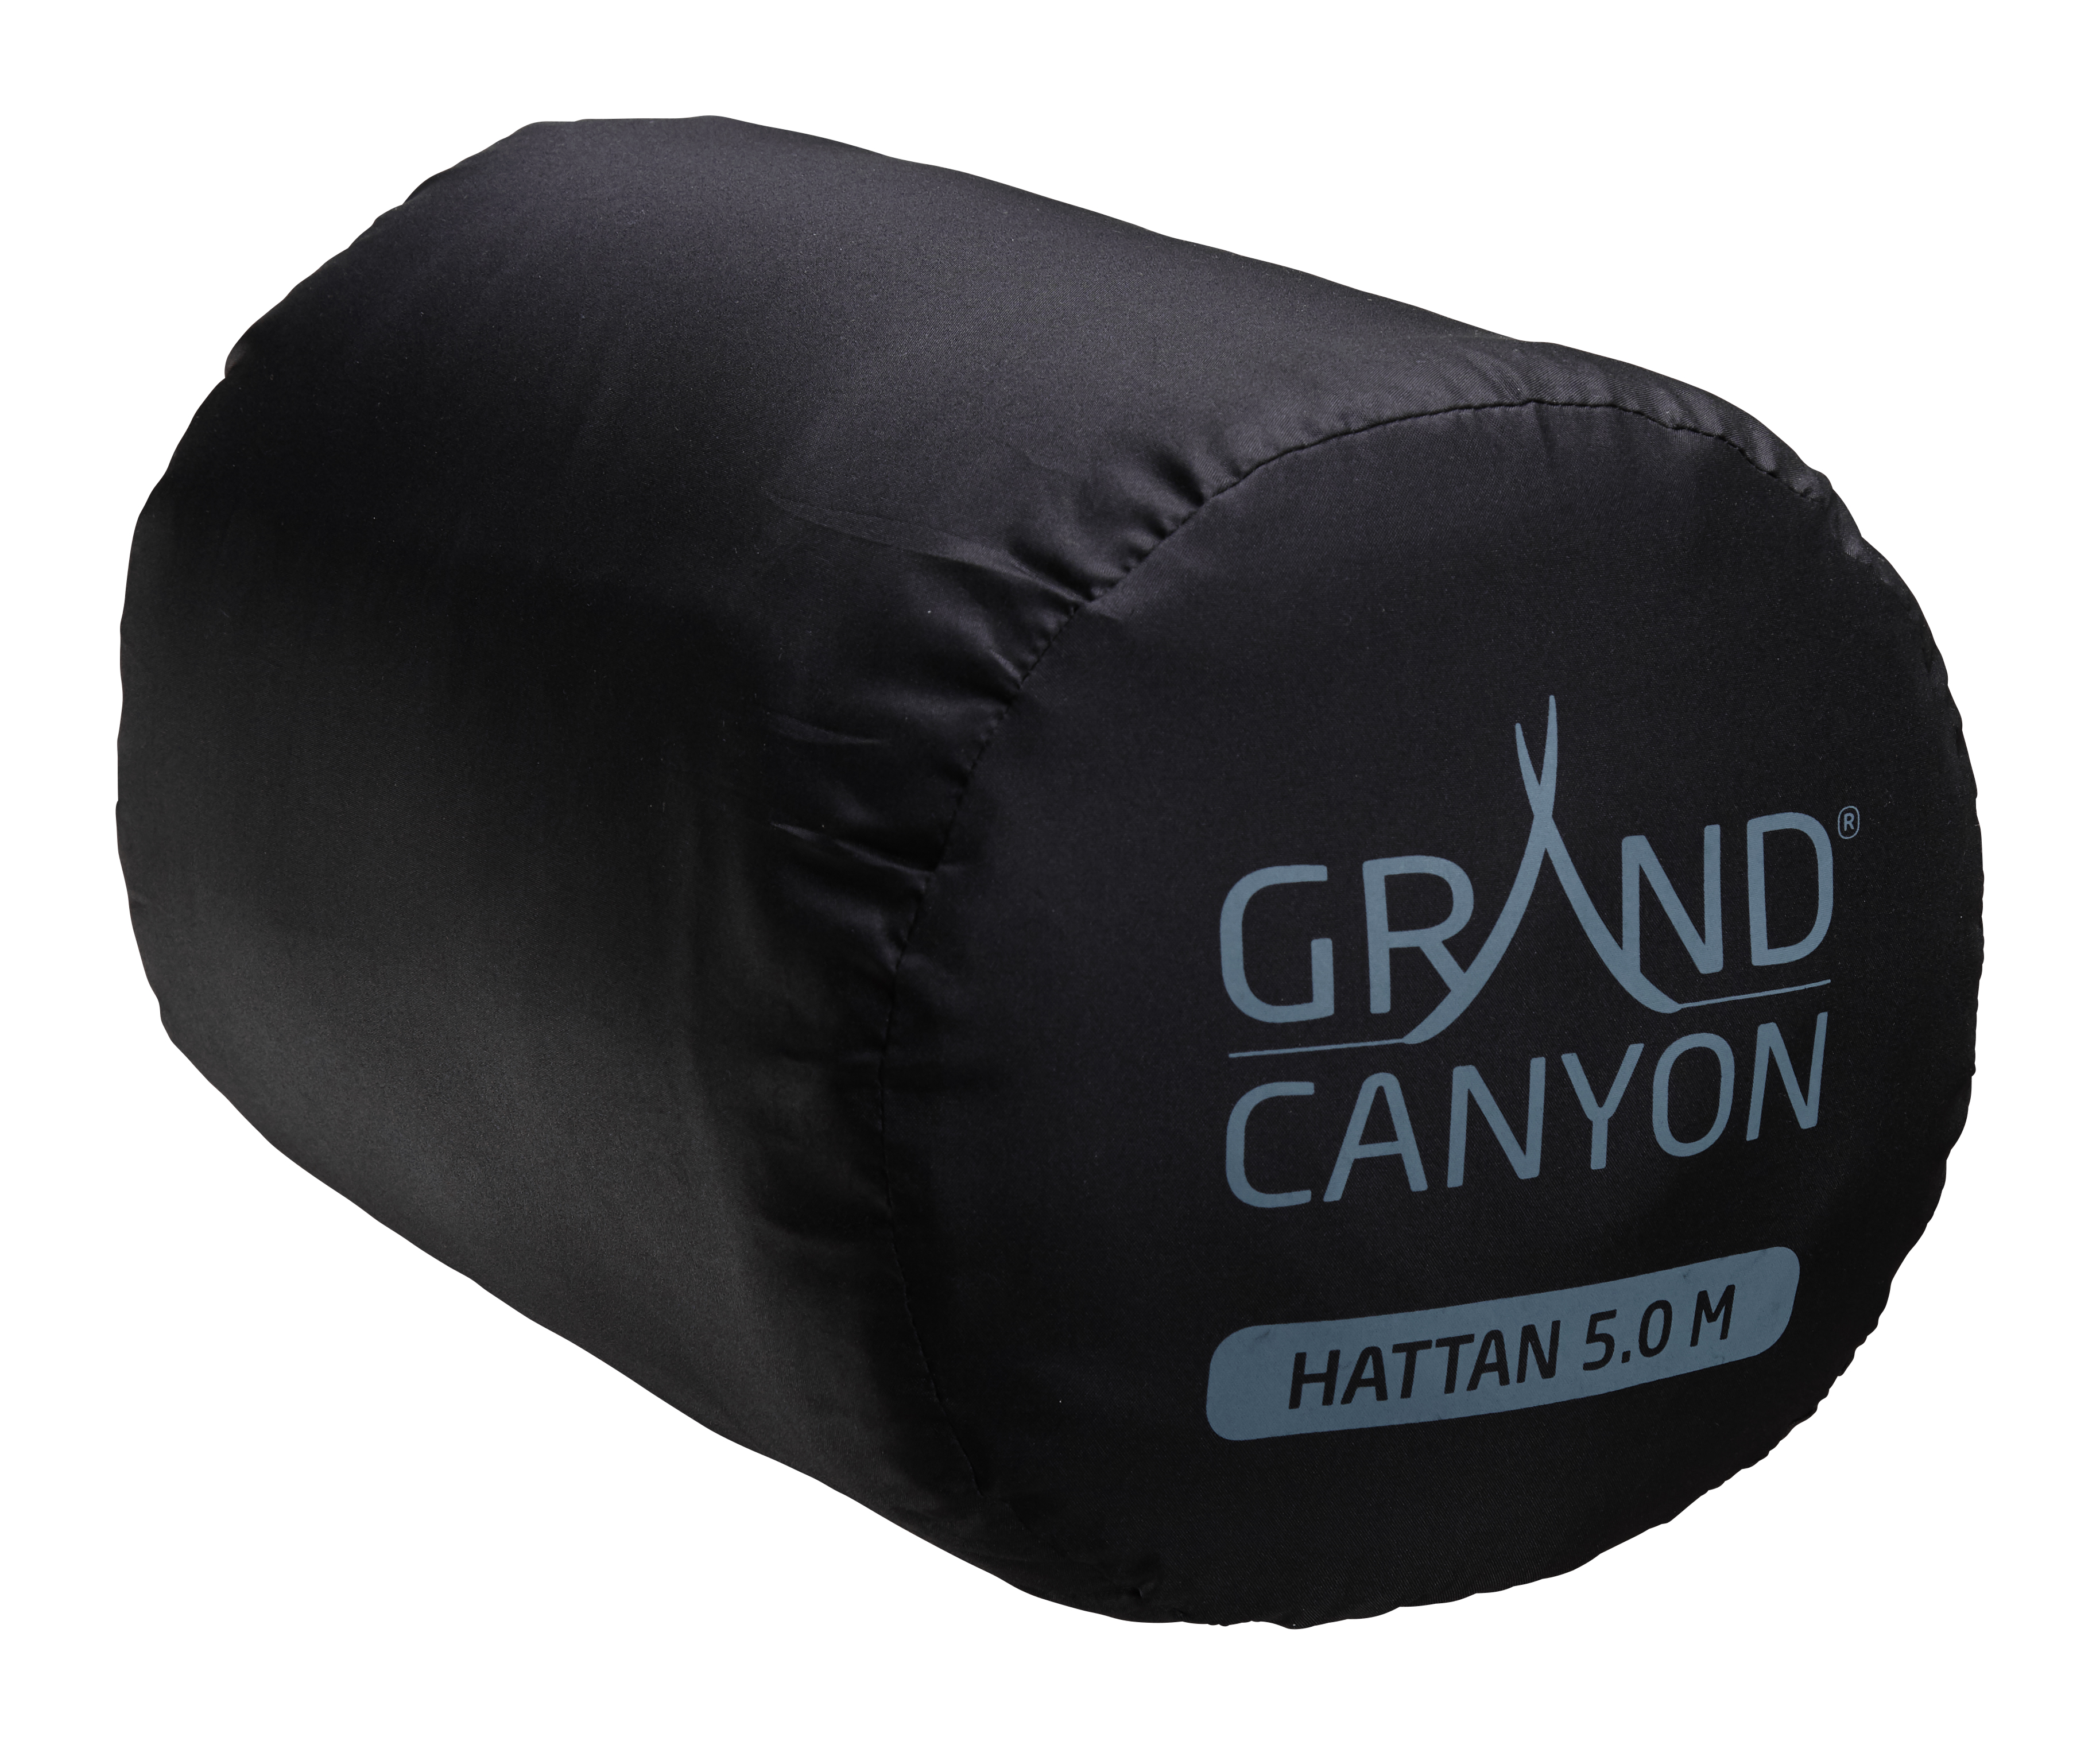 Grand Canyon "Hattan 5.0 M" - meadowbrook